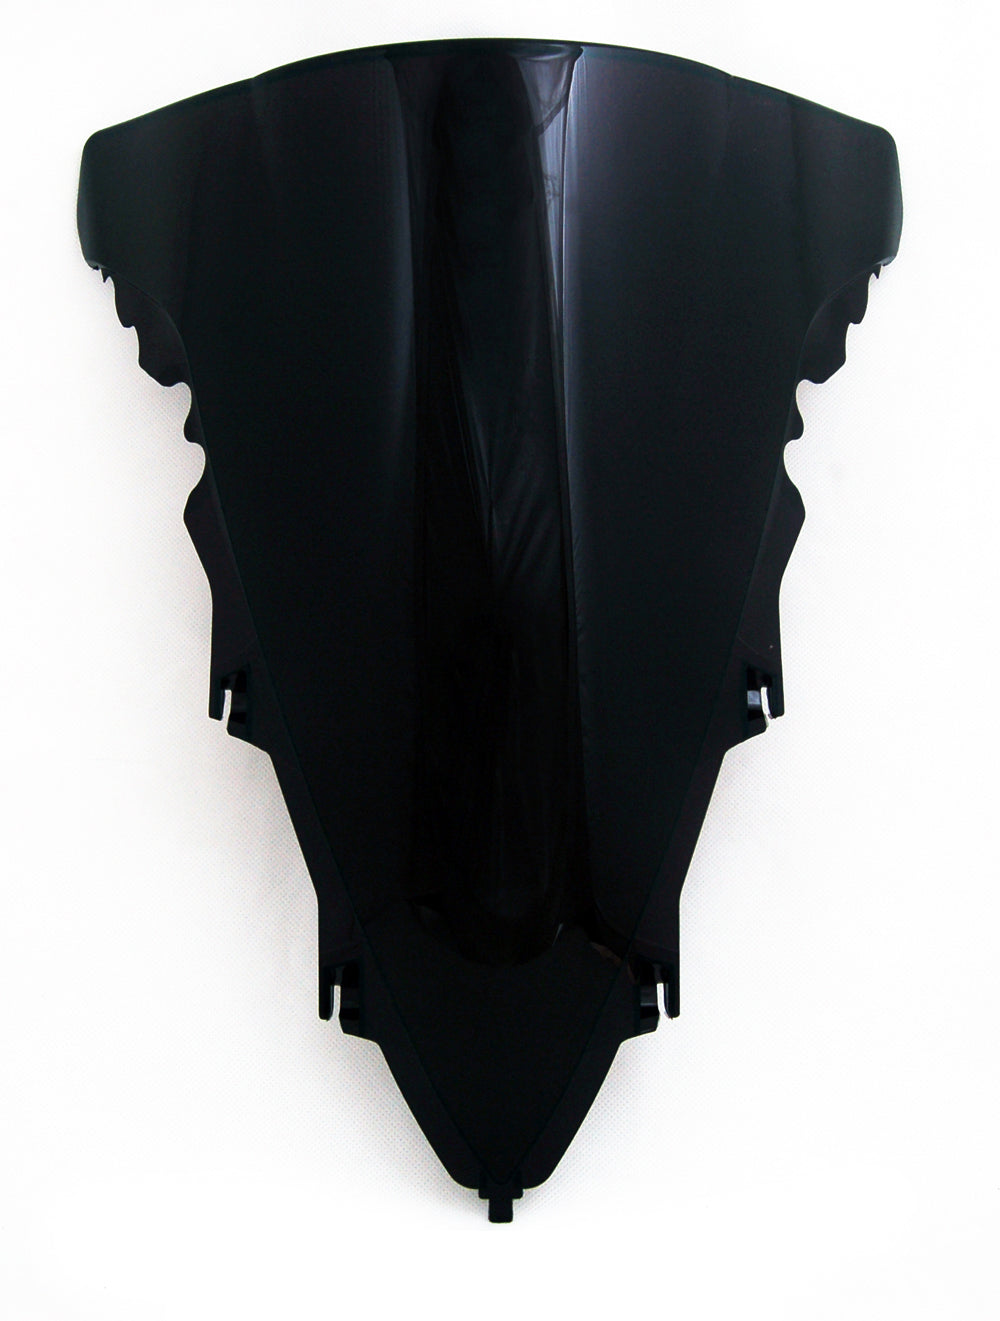 Windshield Windscreen Double Bubble For Yamaha YZFR1 2009-2014 YZF 1000 R1 Black Generic